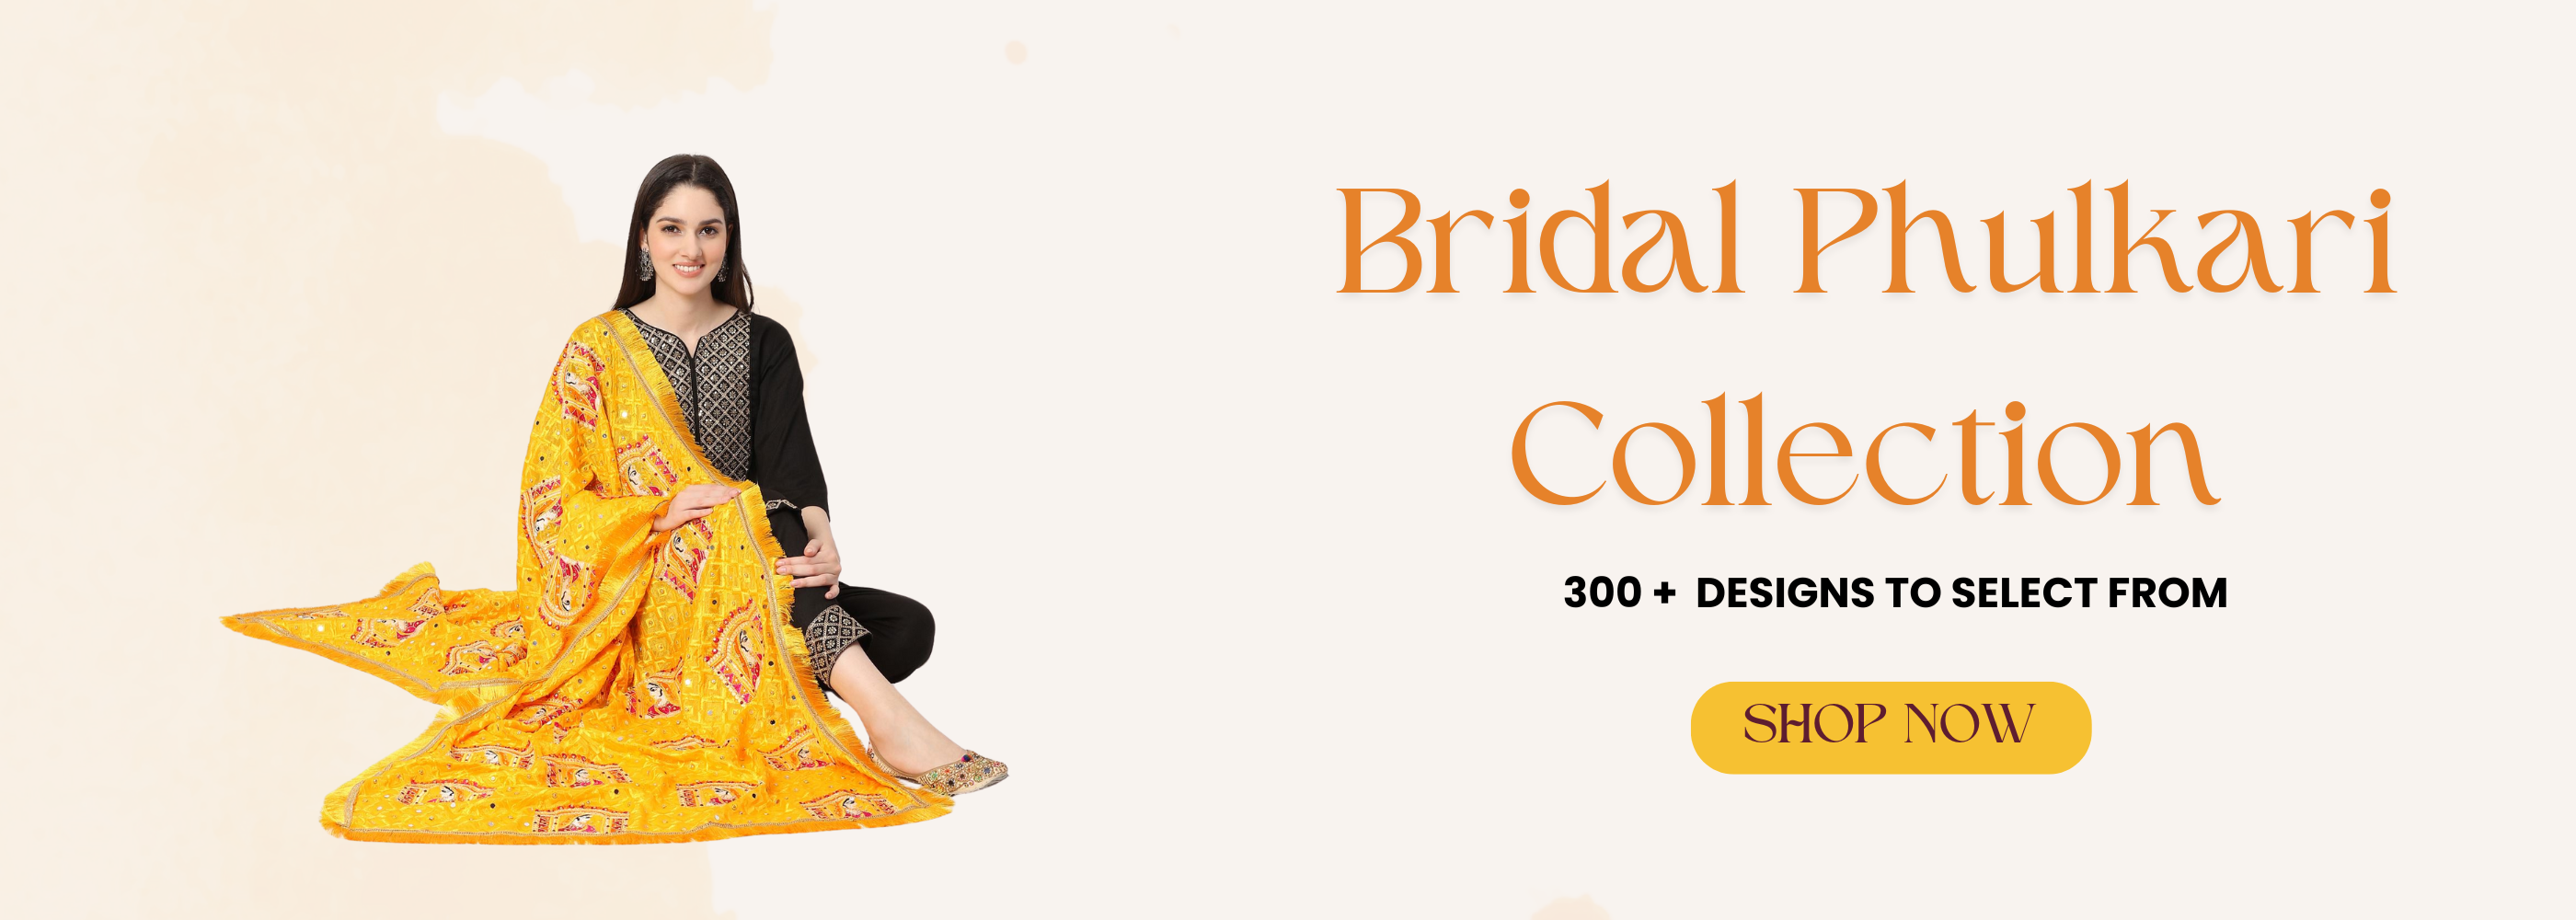 Shop for Bridal Phulkari Dupatta Online at Moda Chales